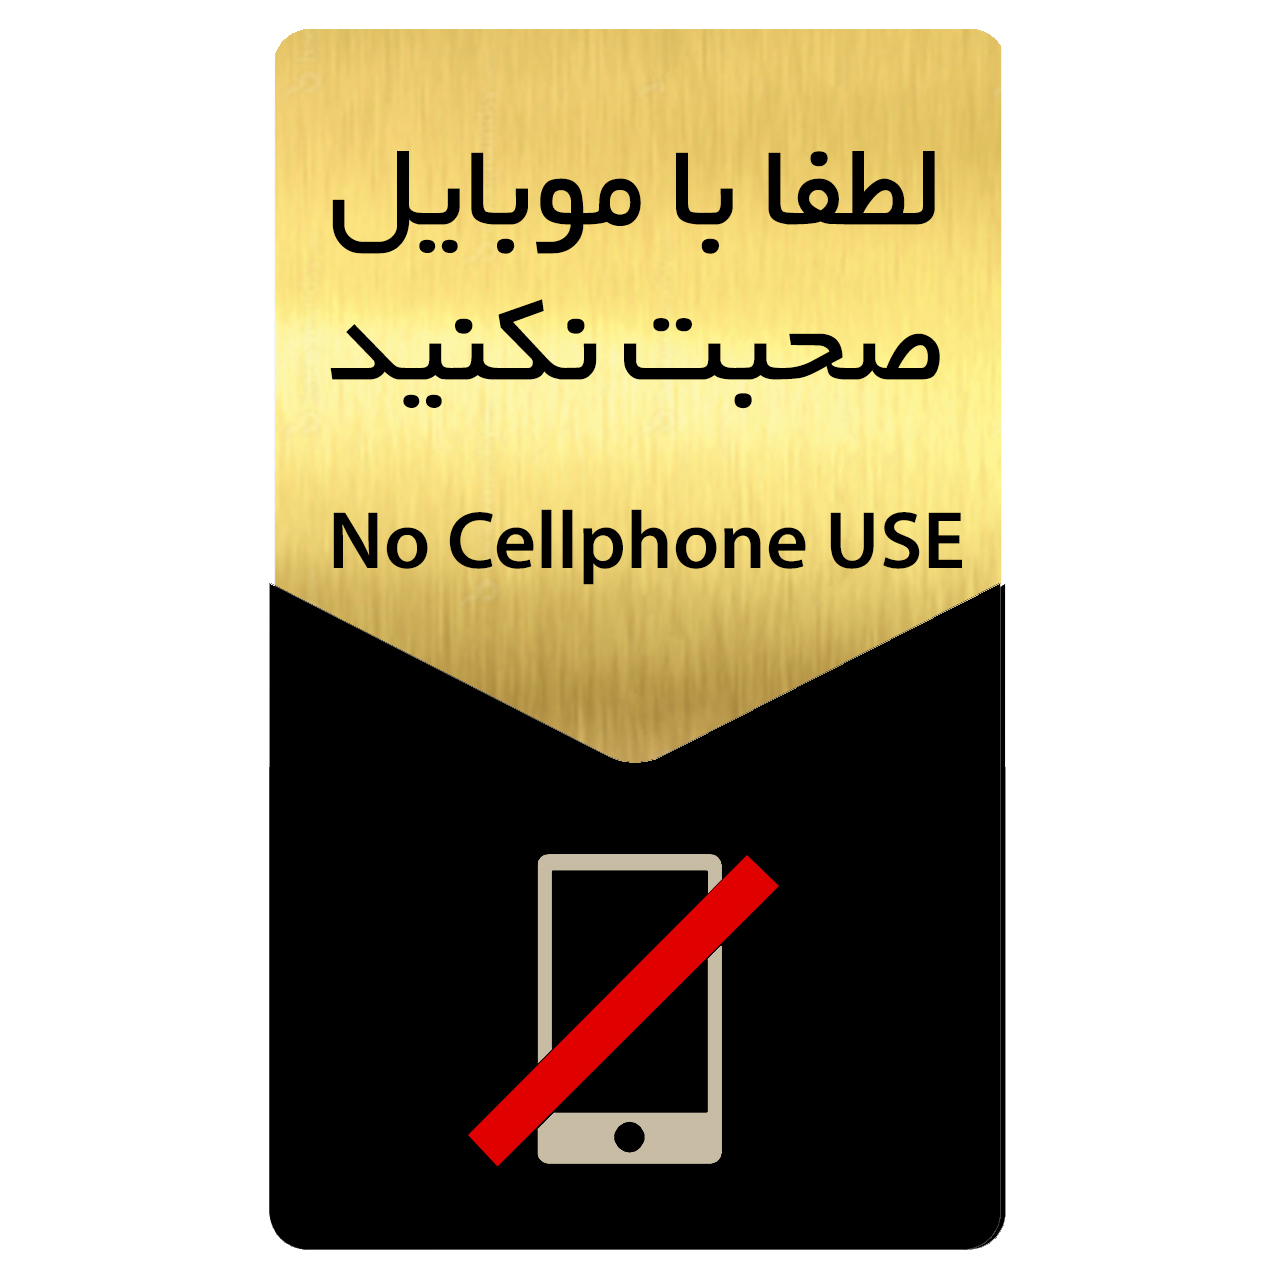 No Cellphone Use